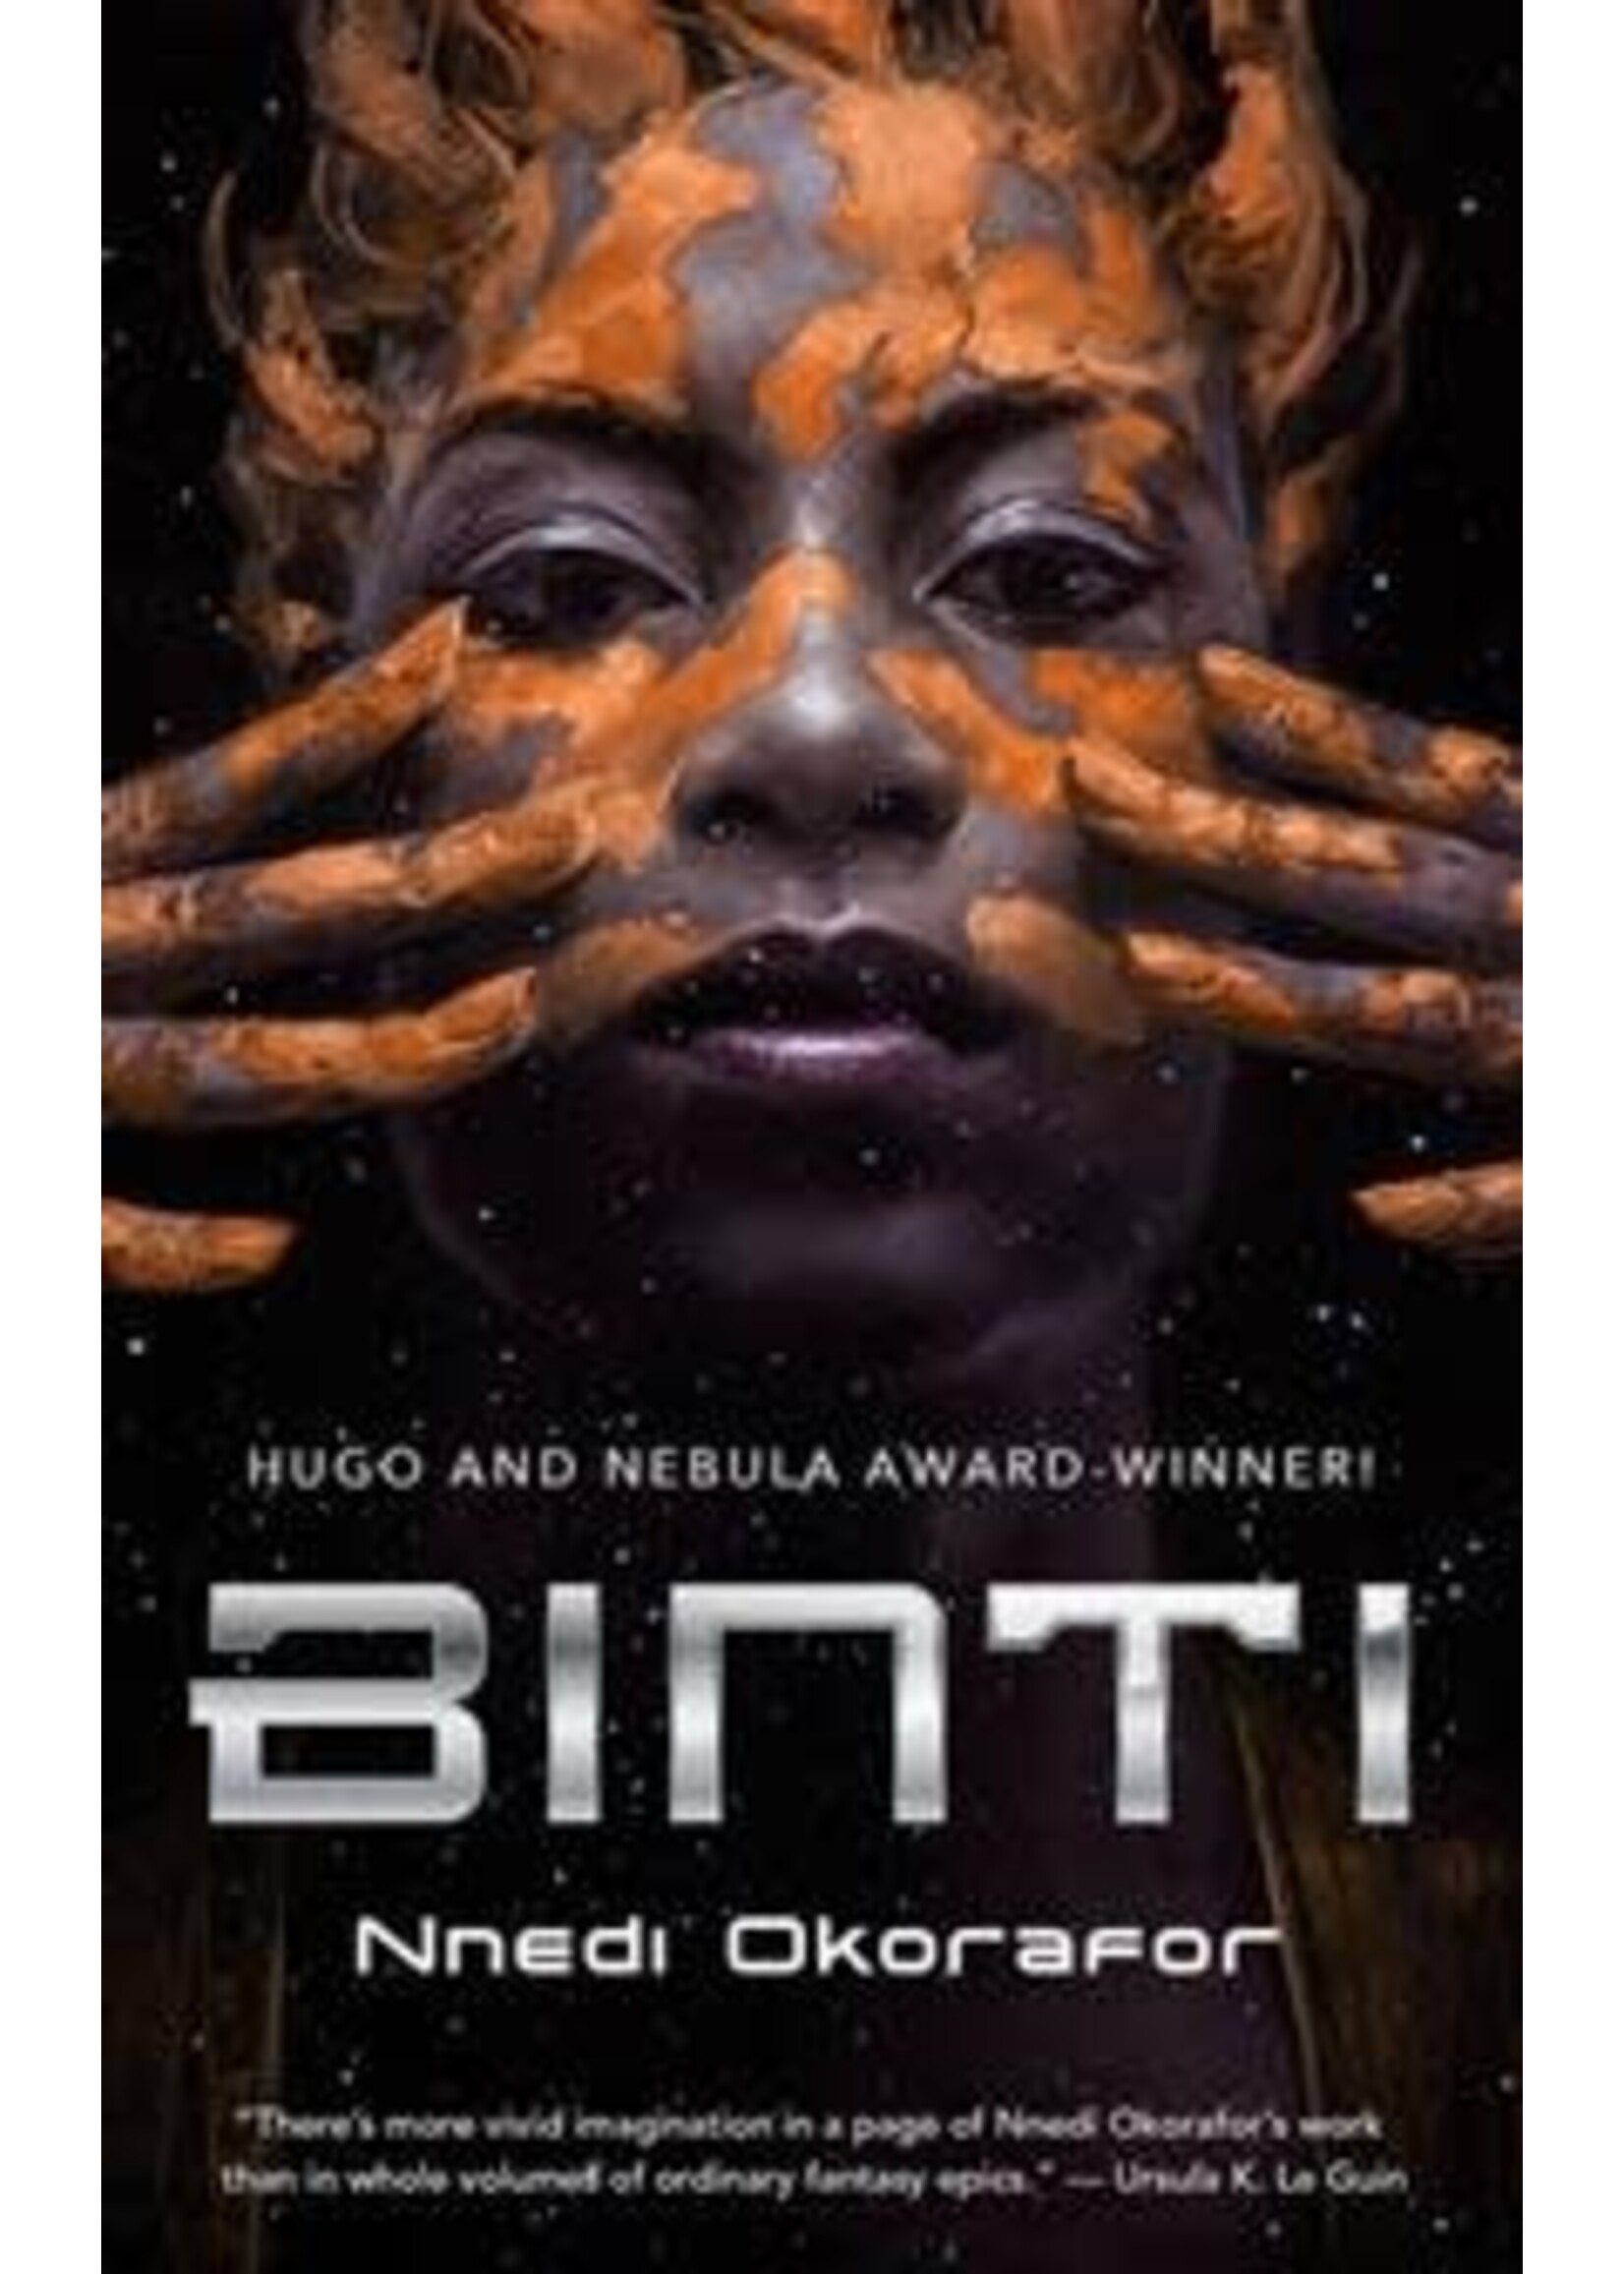 Binti (Binti #1) by Nnedi Okorafor